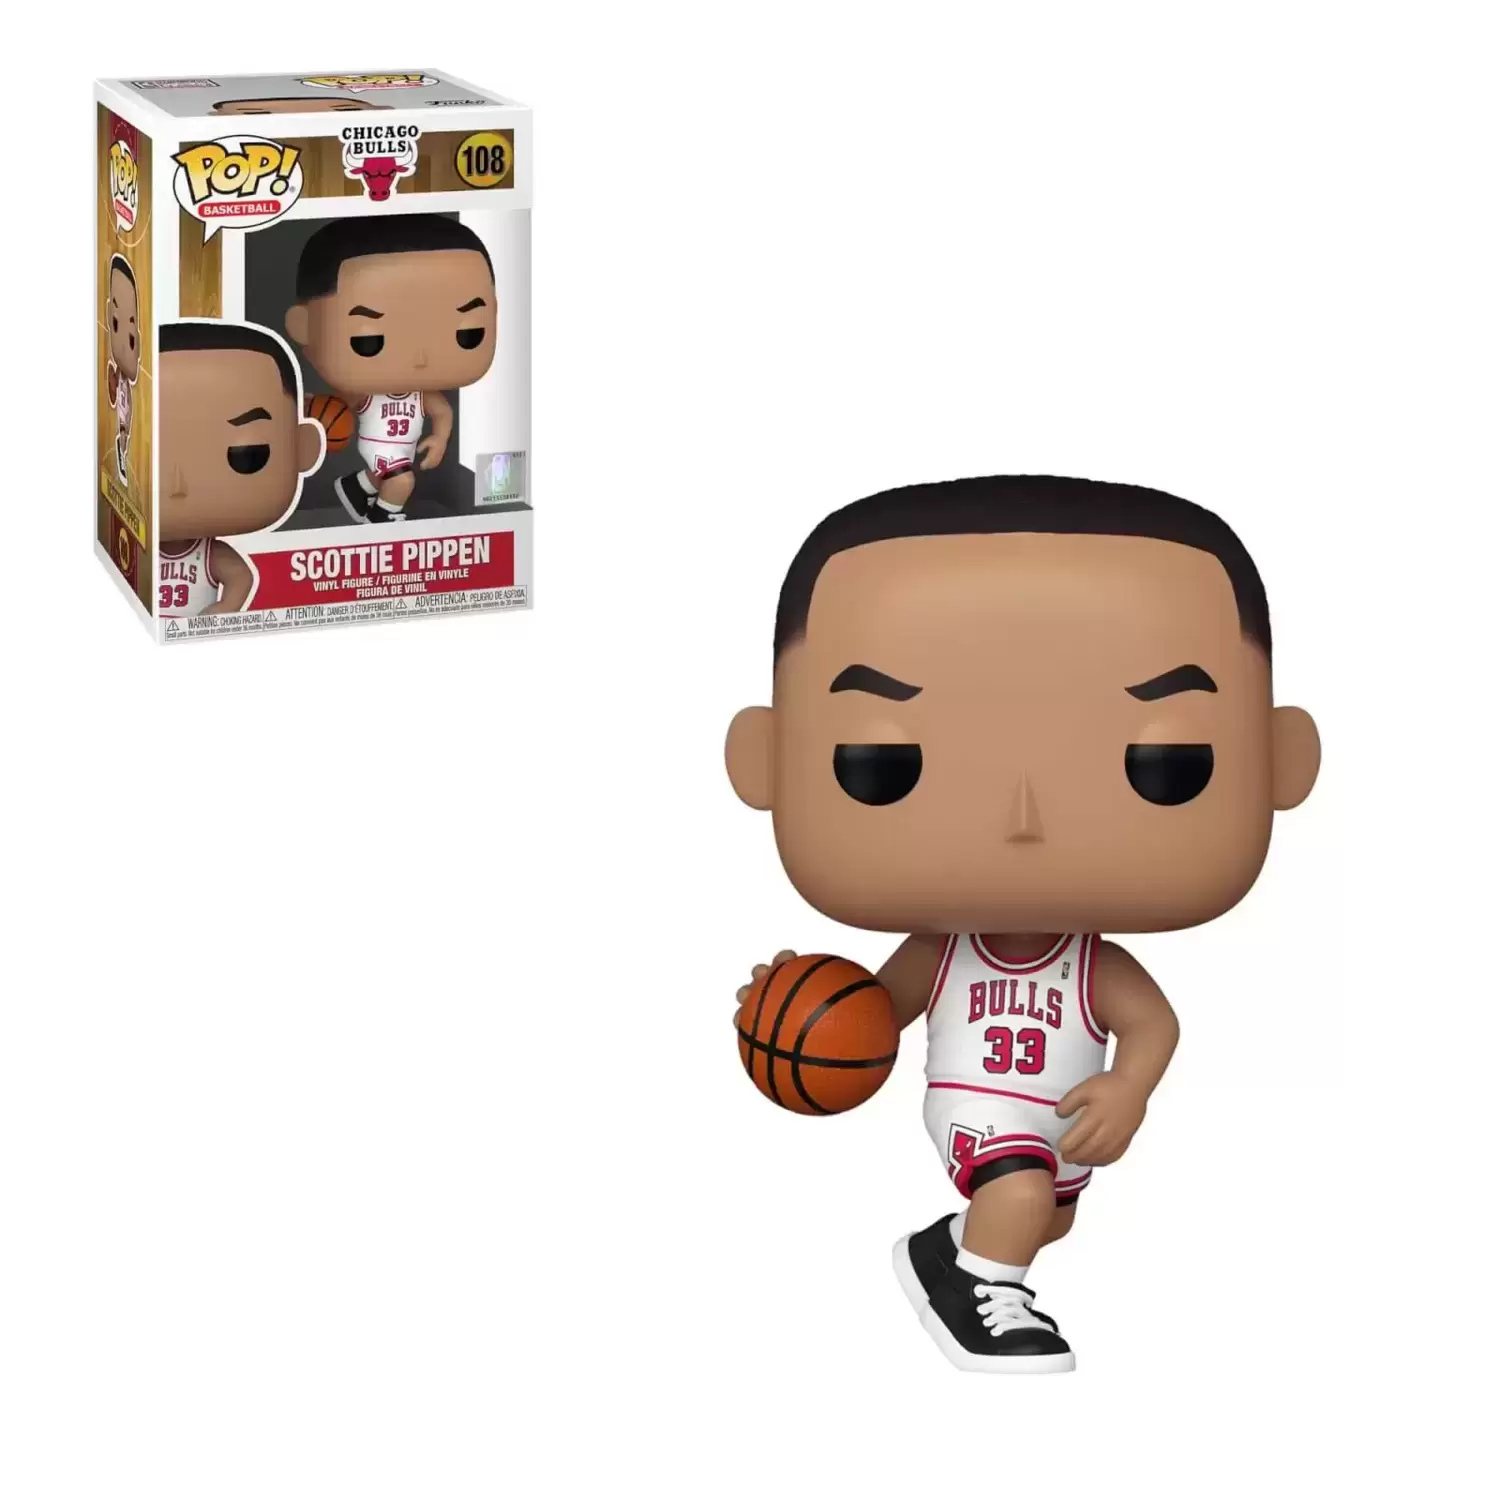 POP! Sports/Basketball - Bulls - Scottie Pippen